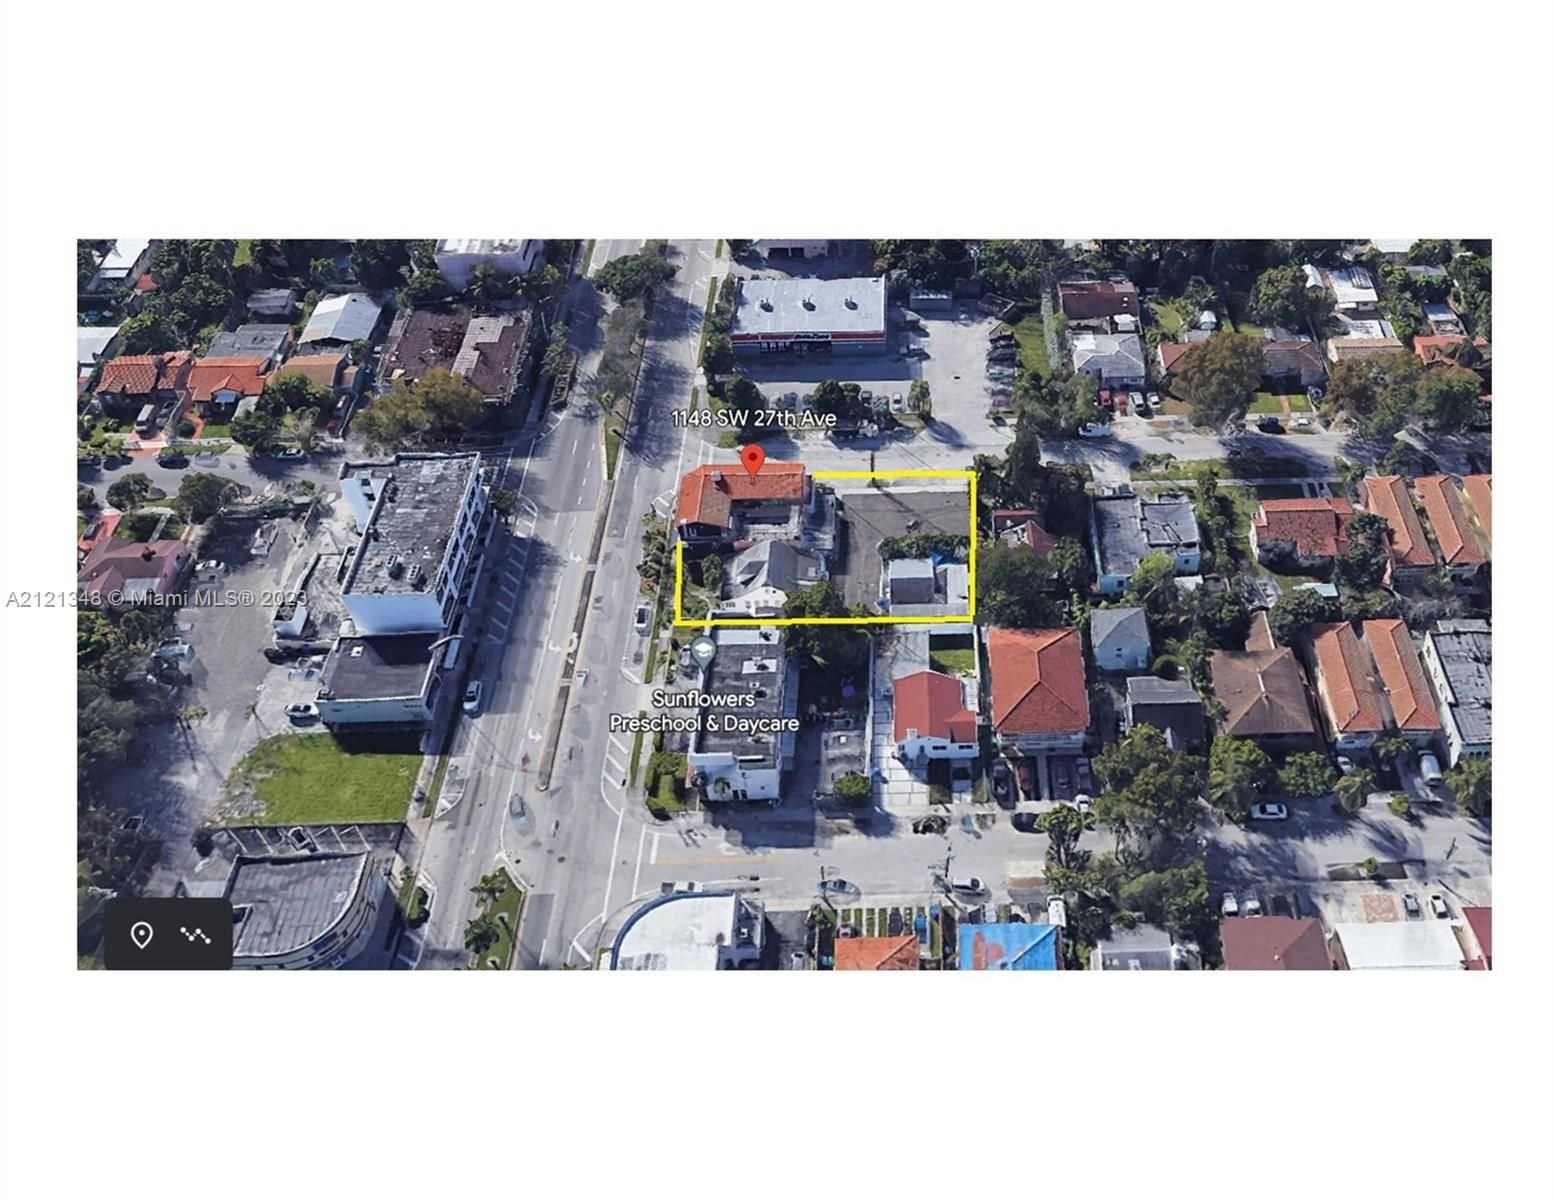 Real estate property located at 1148 27 Av, Miami-Dade County, Miami, FL